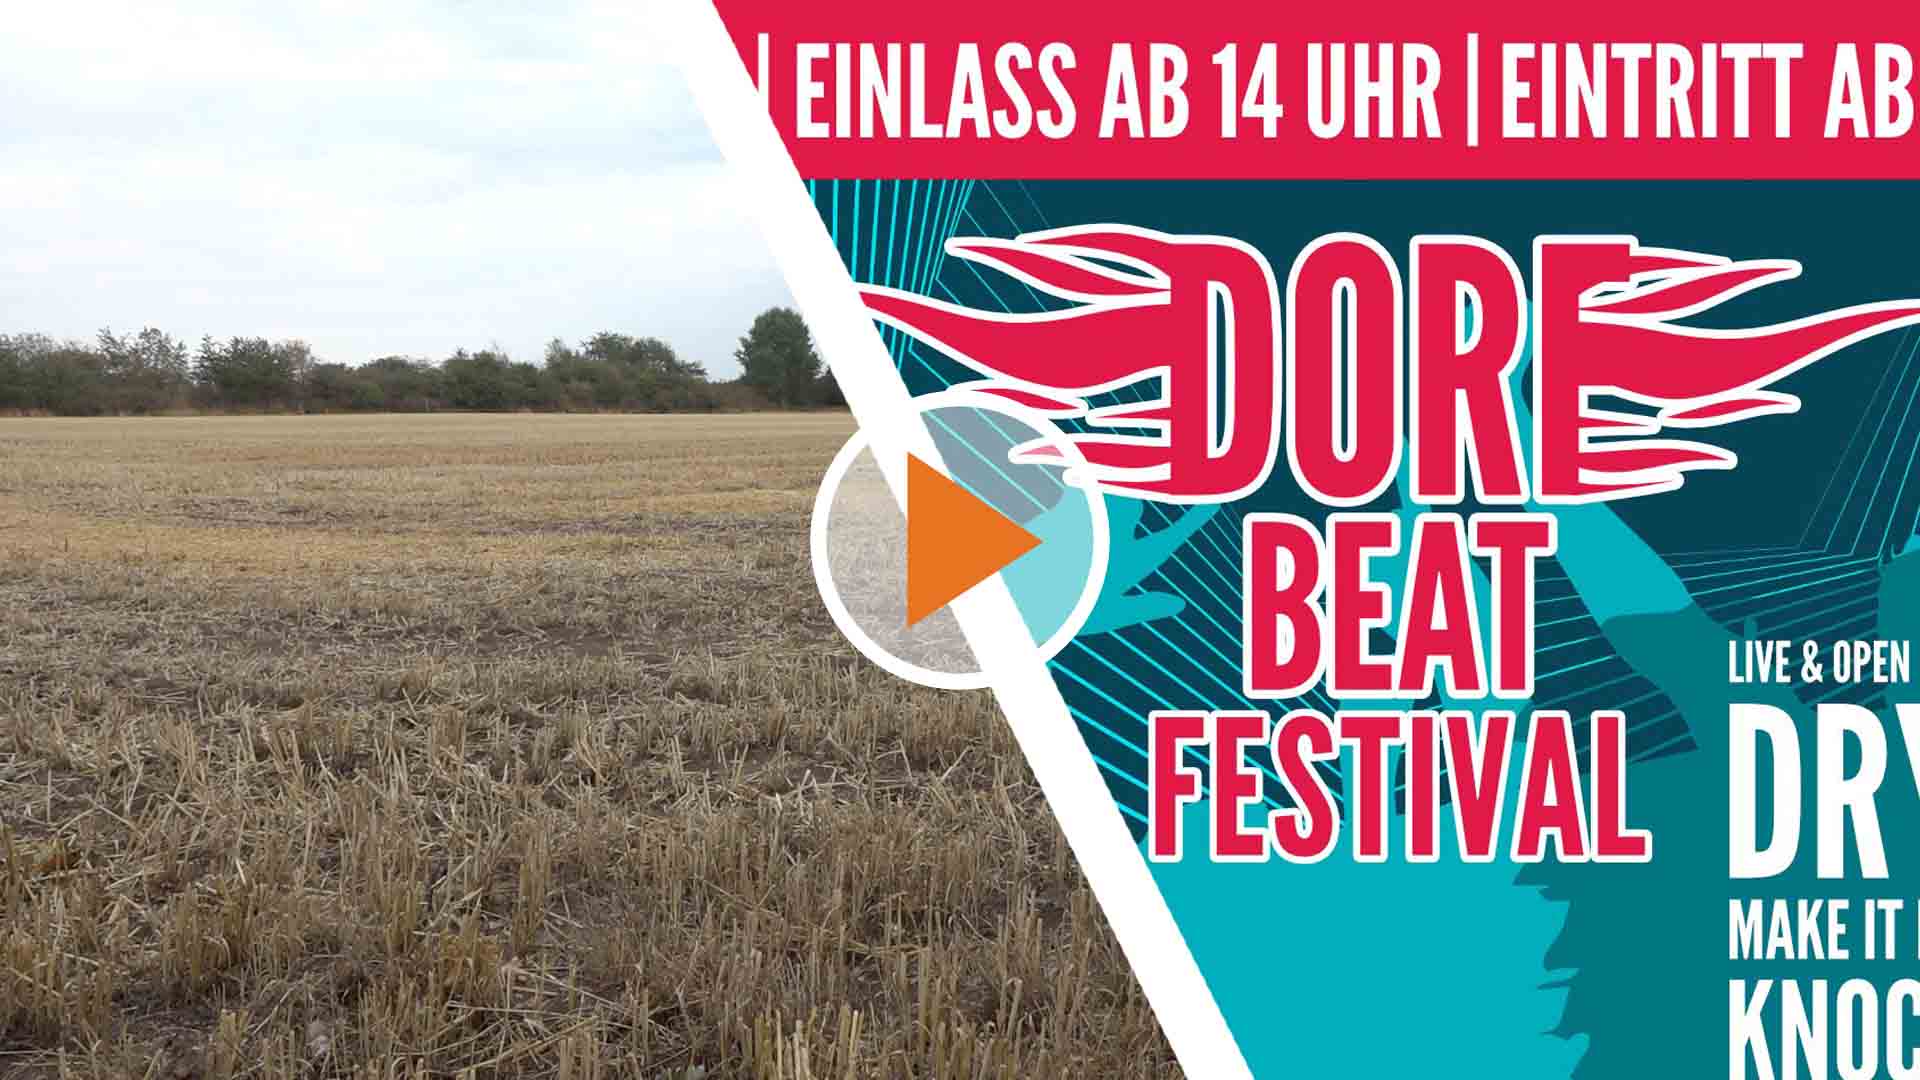 Screen_DorfbeatFestival